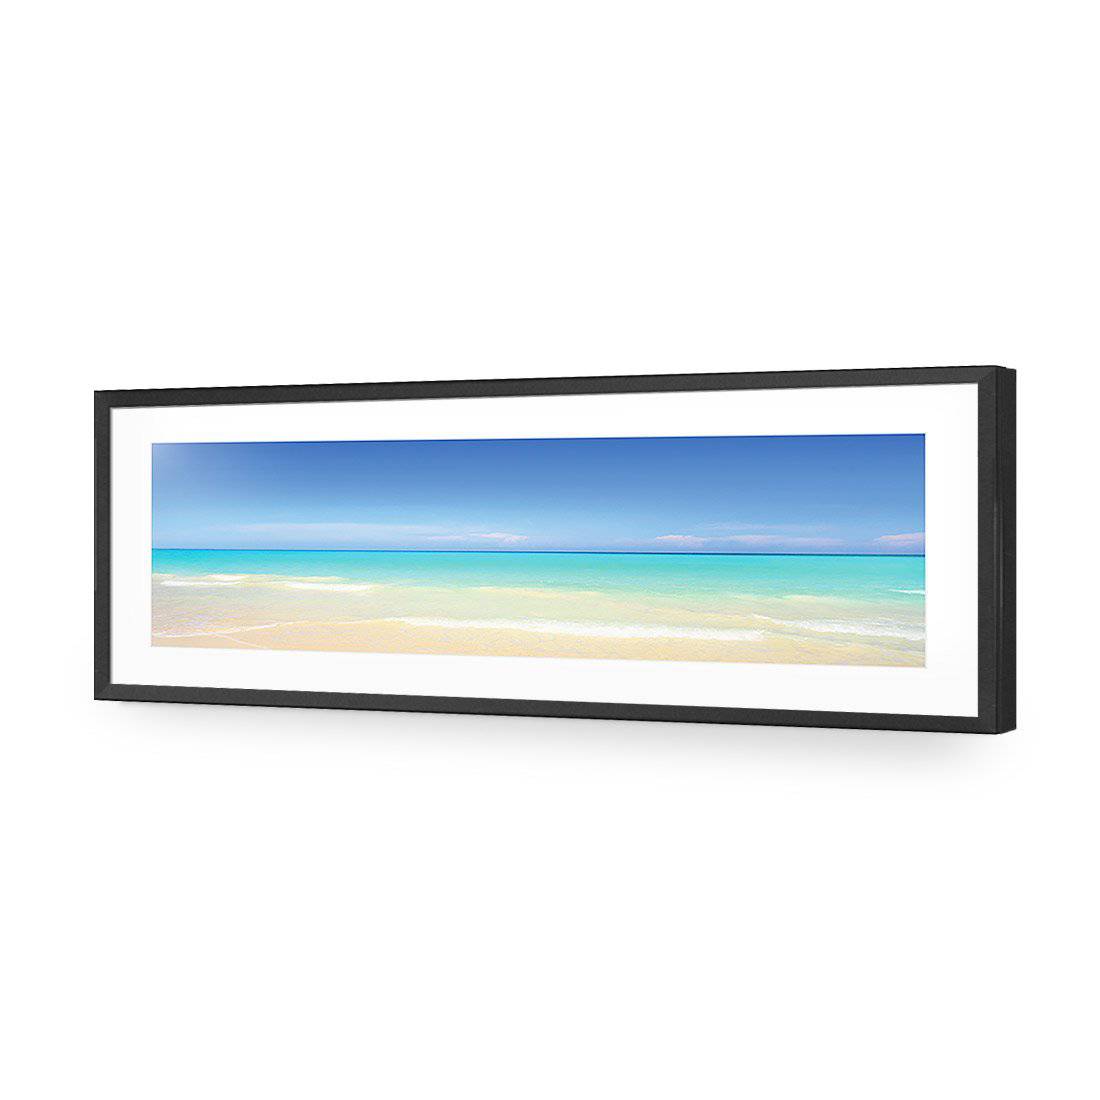 Paradise Beach, Long-Acrylic-Wall Art Design-With Border-Acrylic - Black Frame-60x20cm-Wall Art Designs